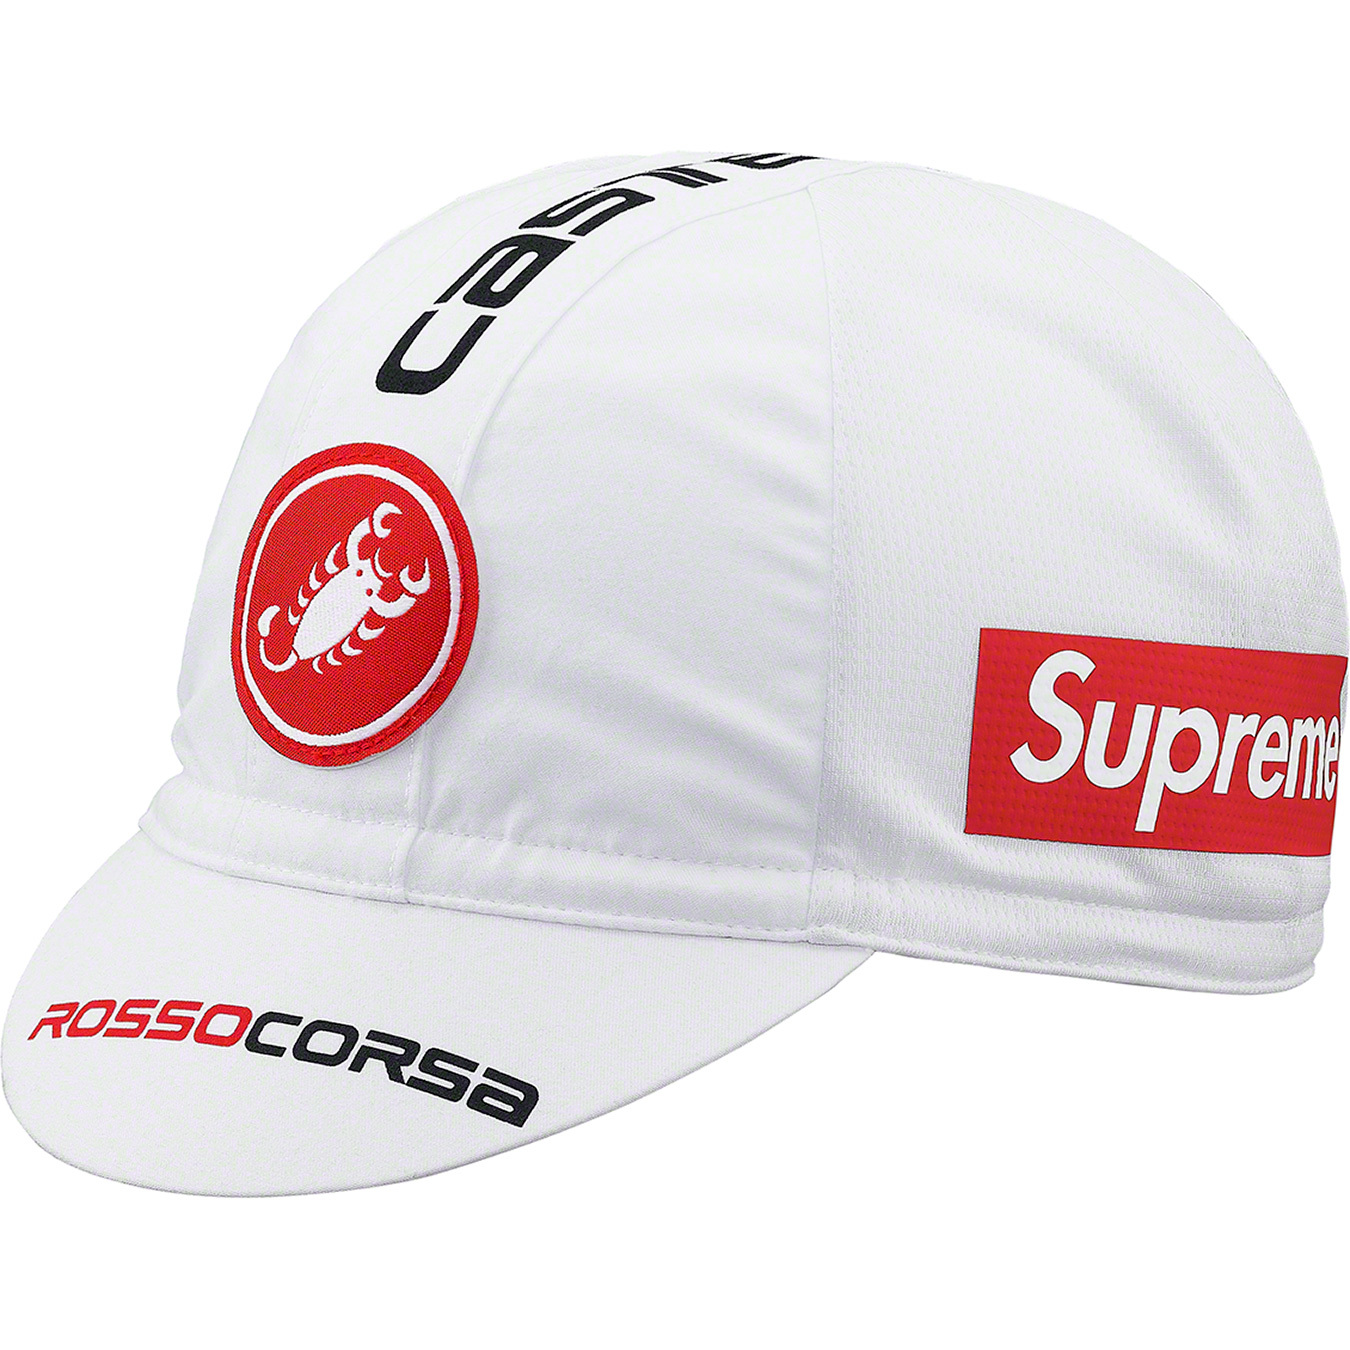 Supreme Supreme®/Castelli Cycling Cap